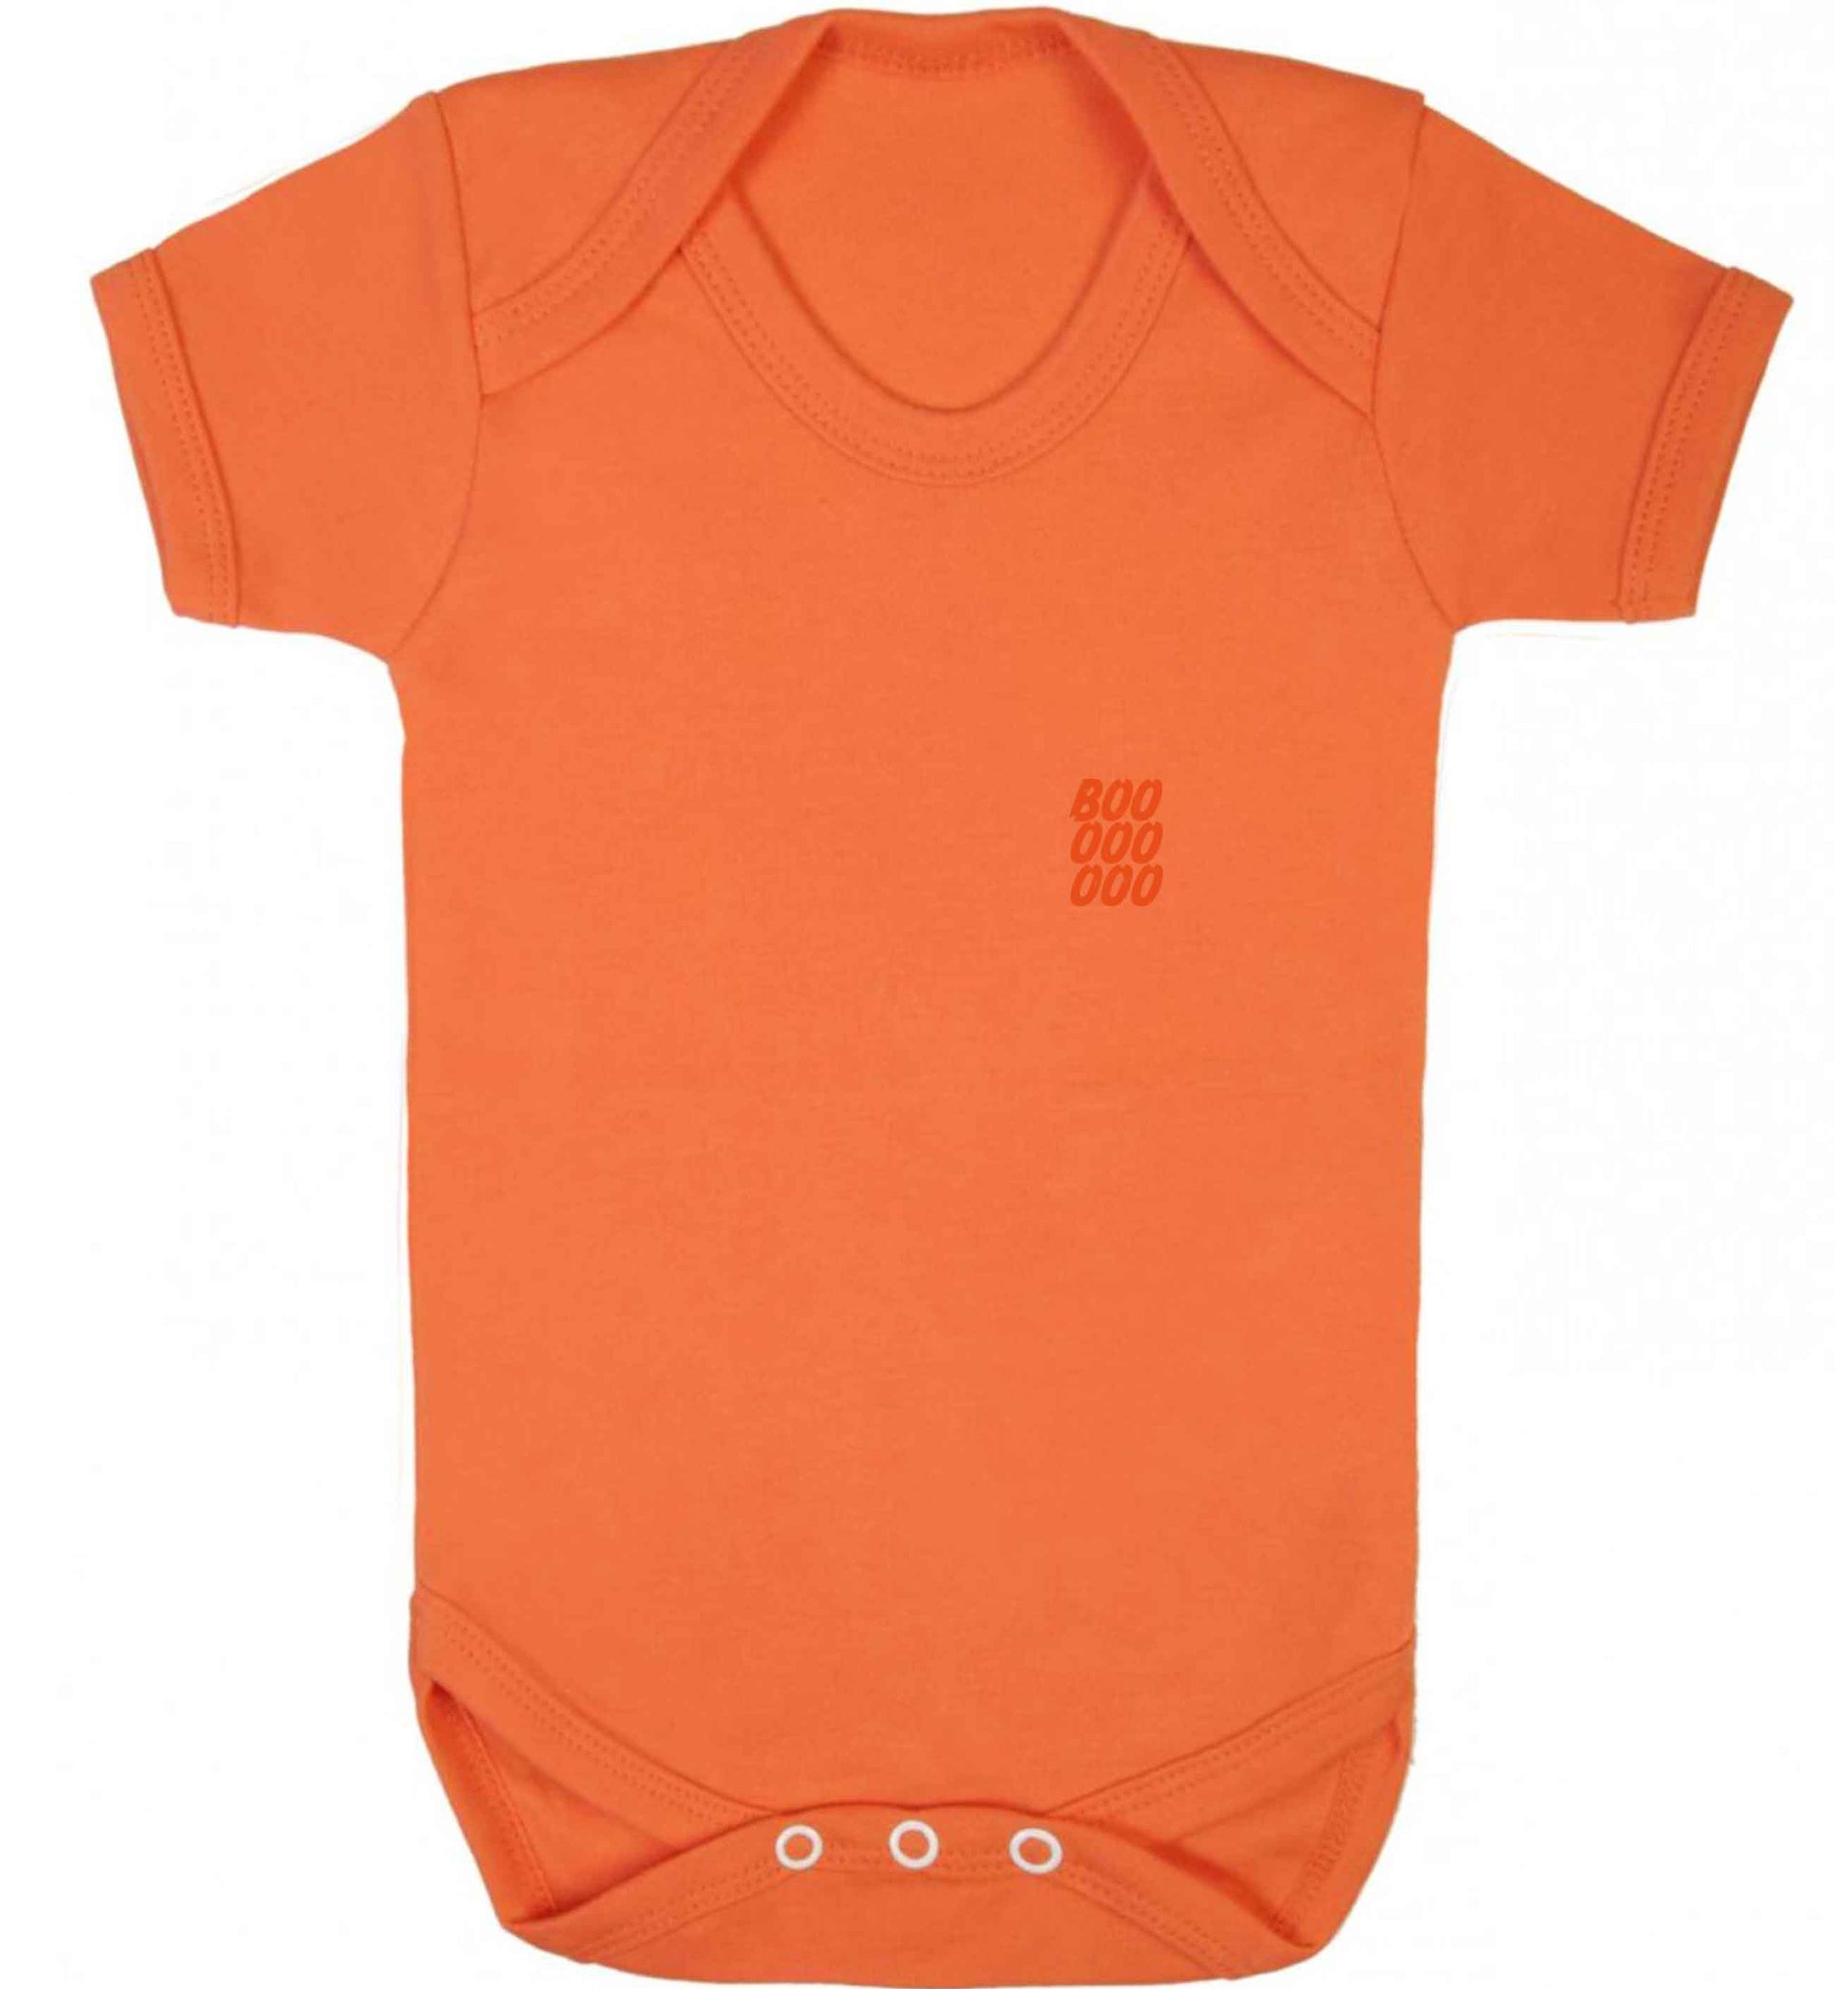 Boo pocket baby vest orange 18-24 months